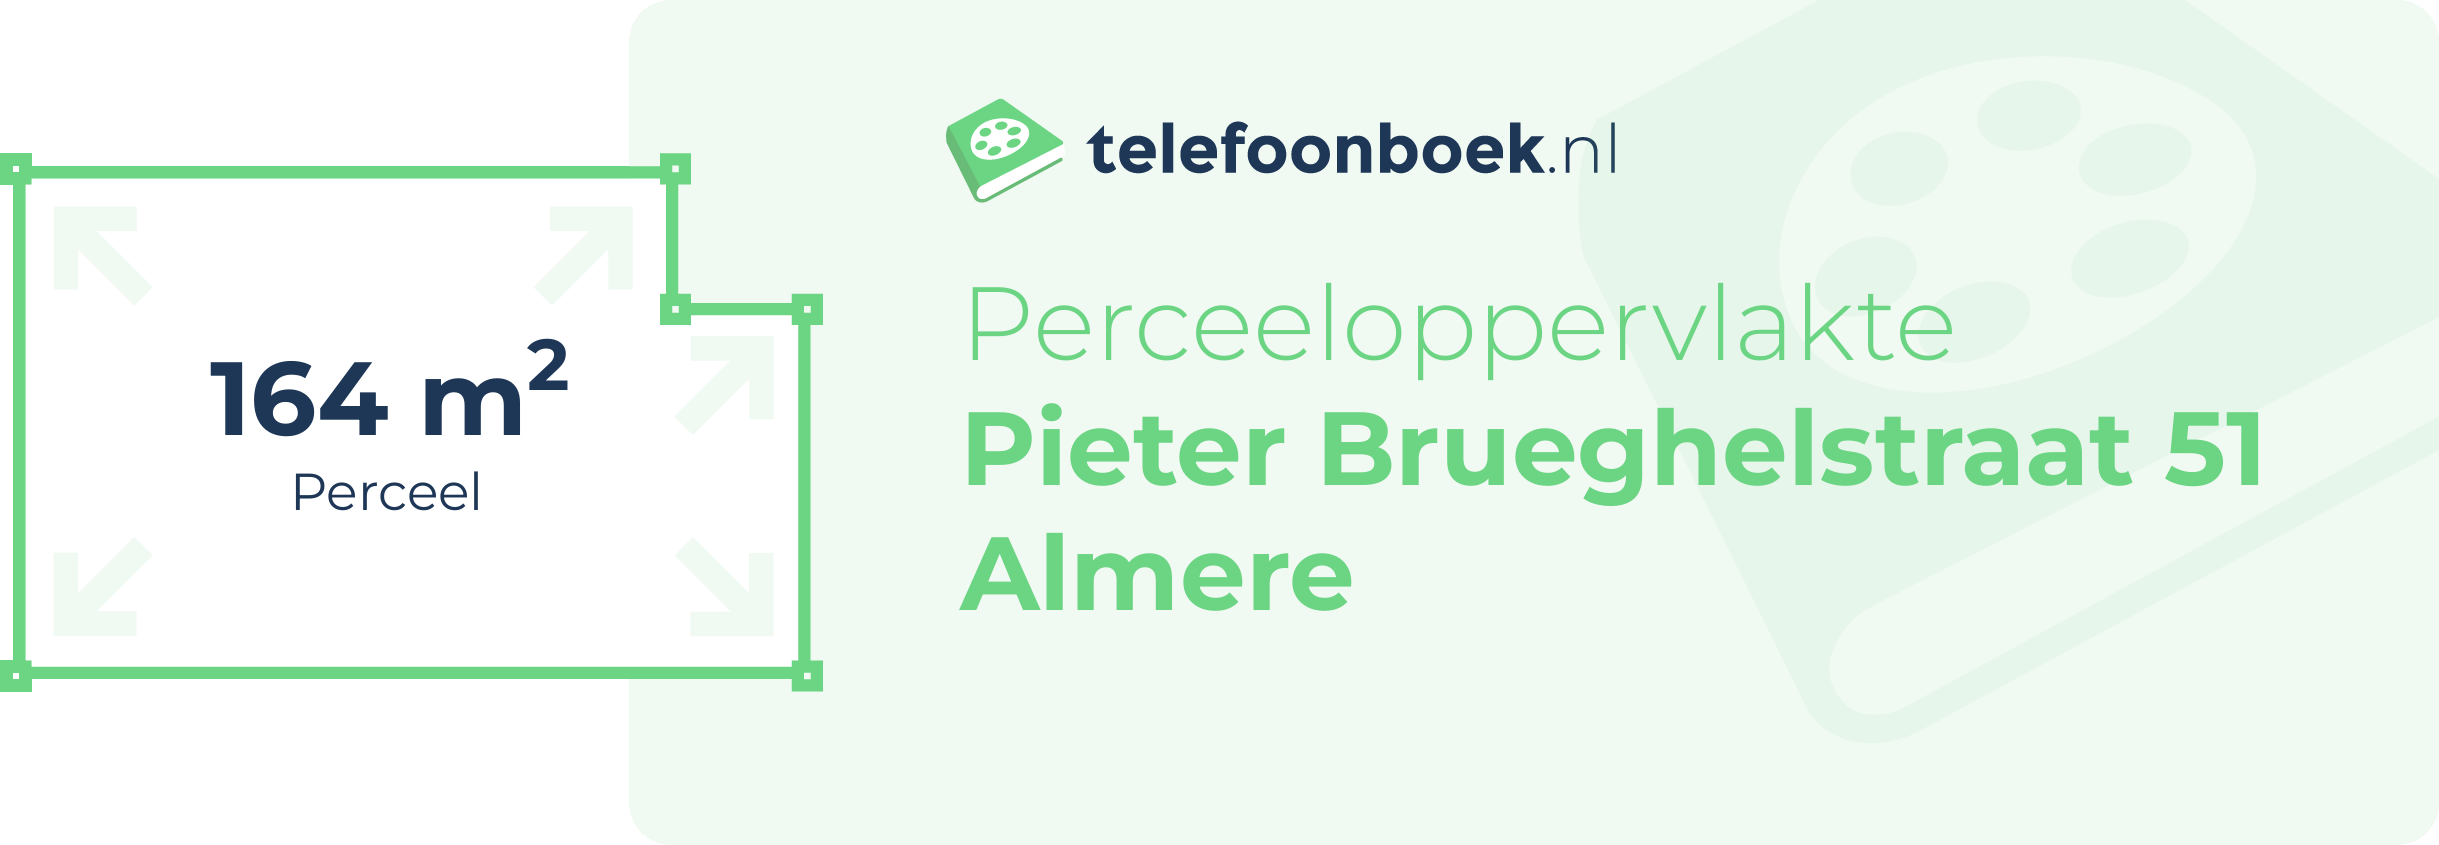 Perceeloppervlakte Pieter Brueghelstraat 51 Almere